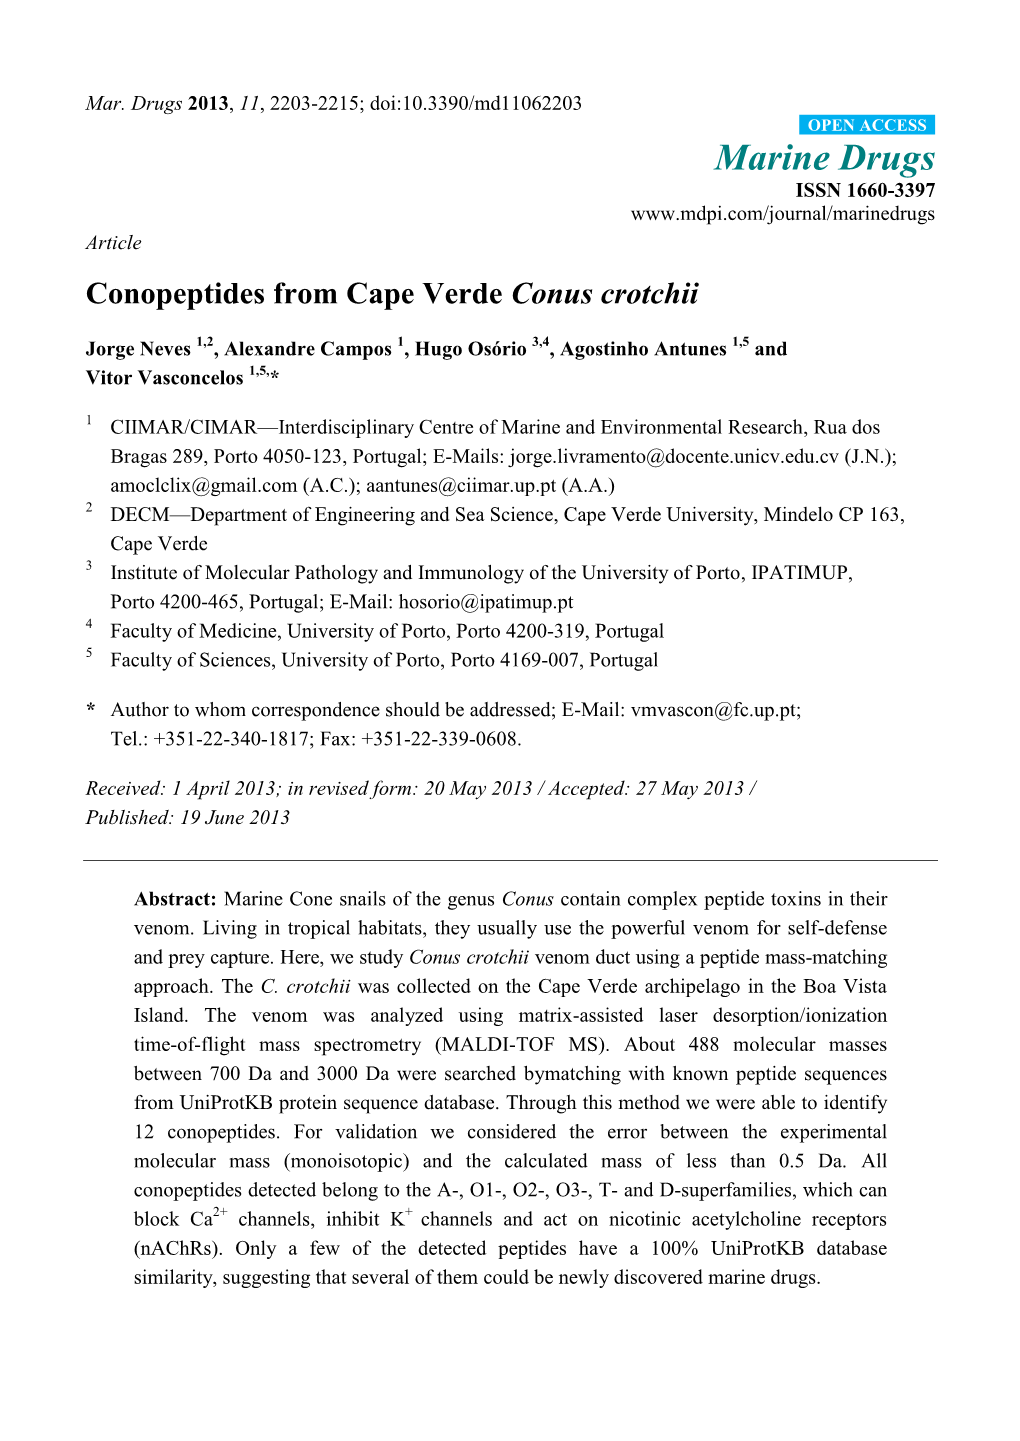 Conopeptides from Cape Verde Conus Crotchii